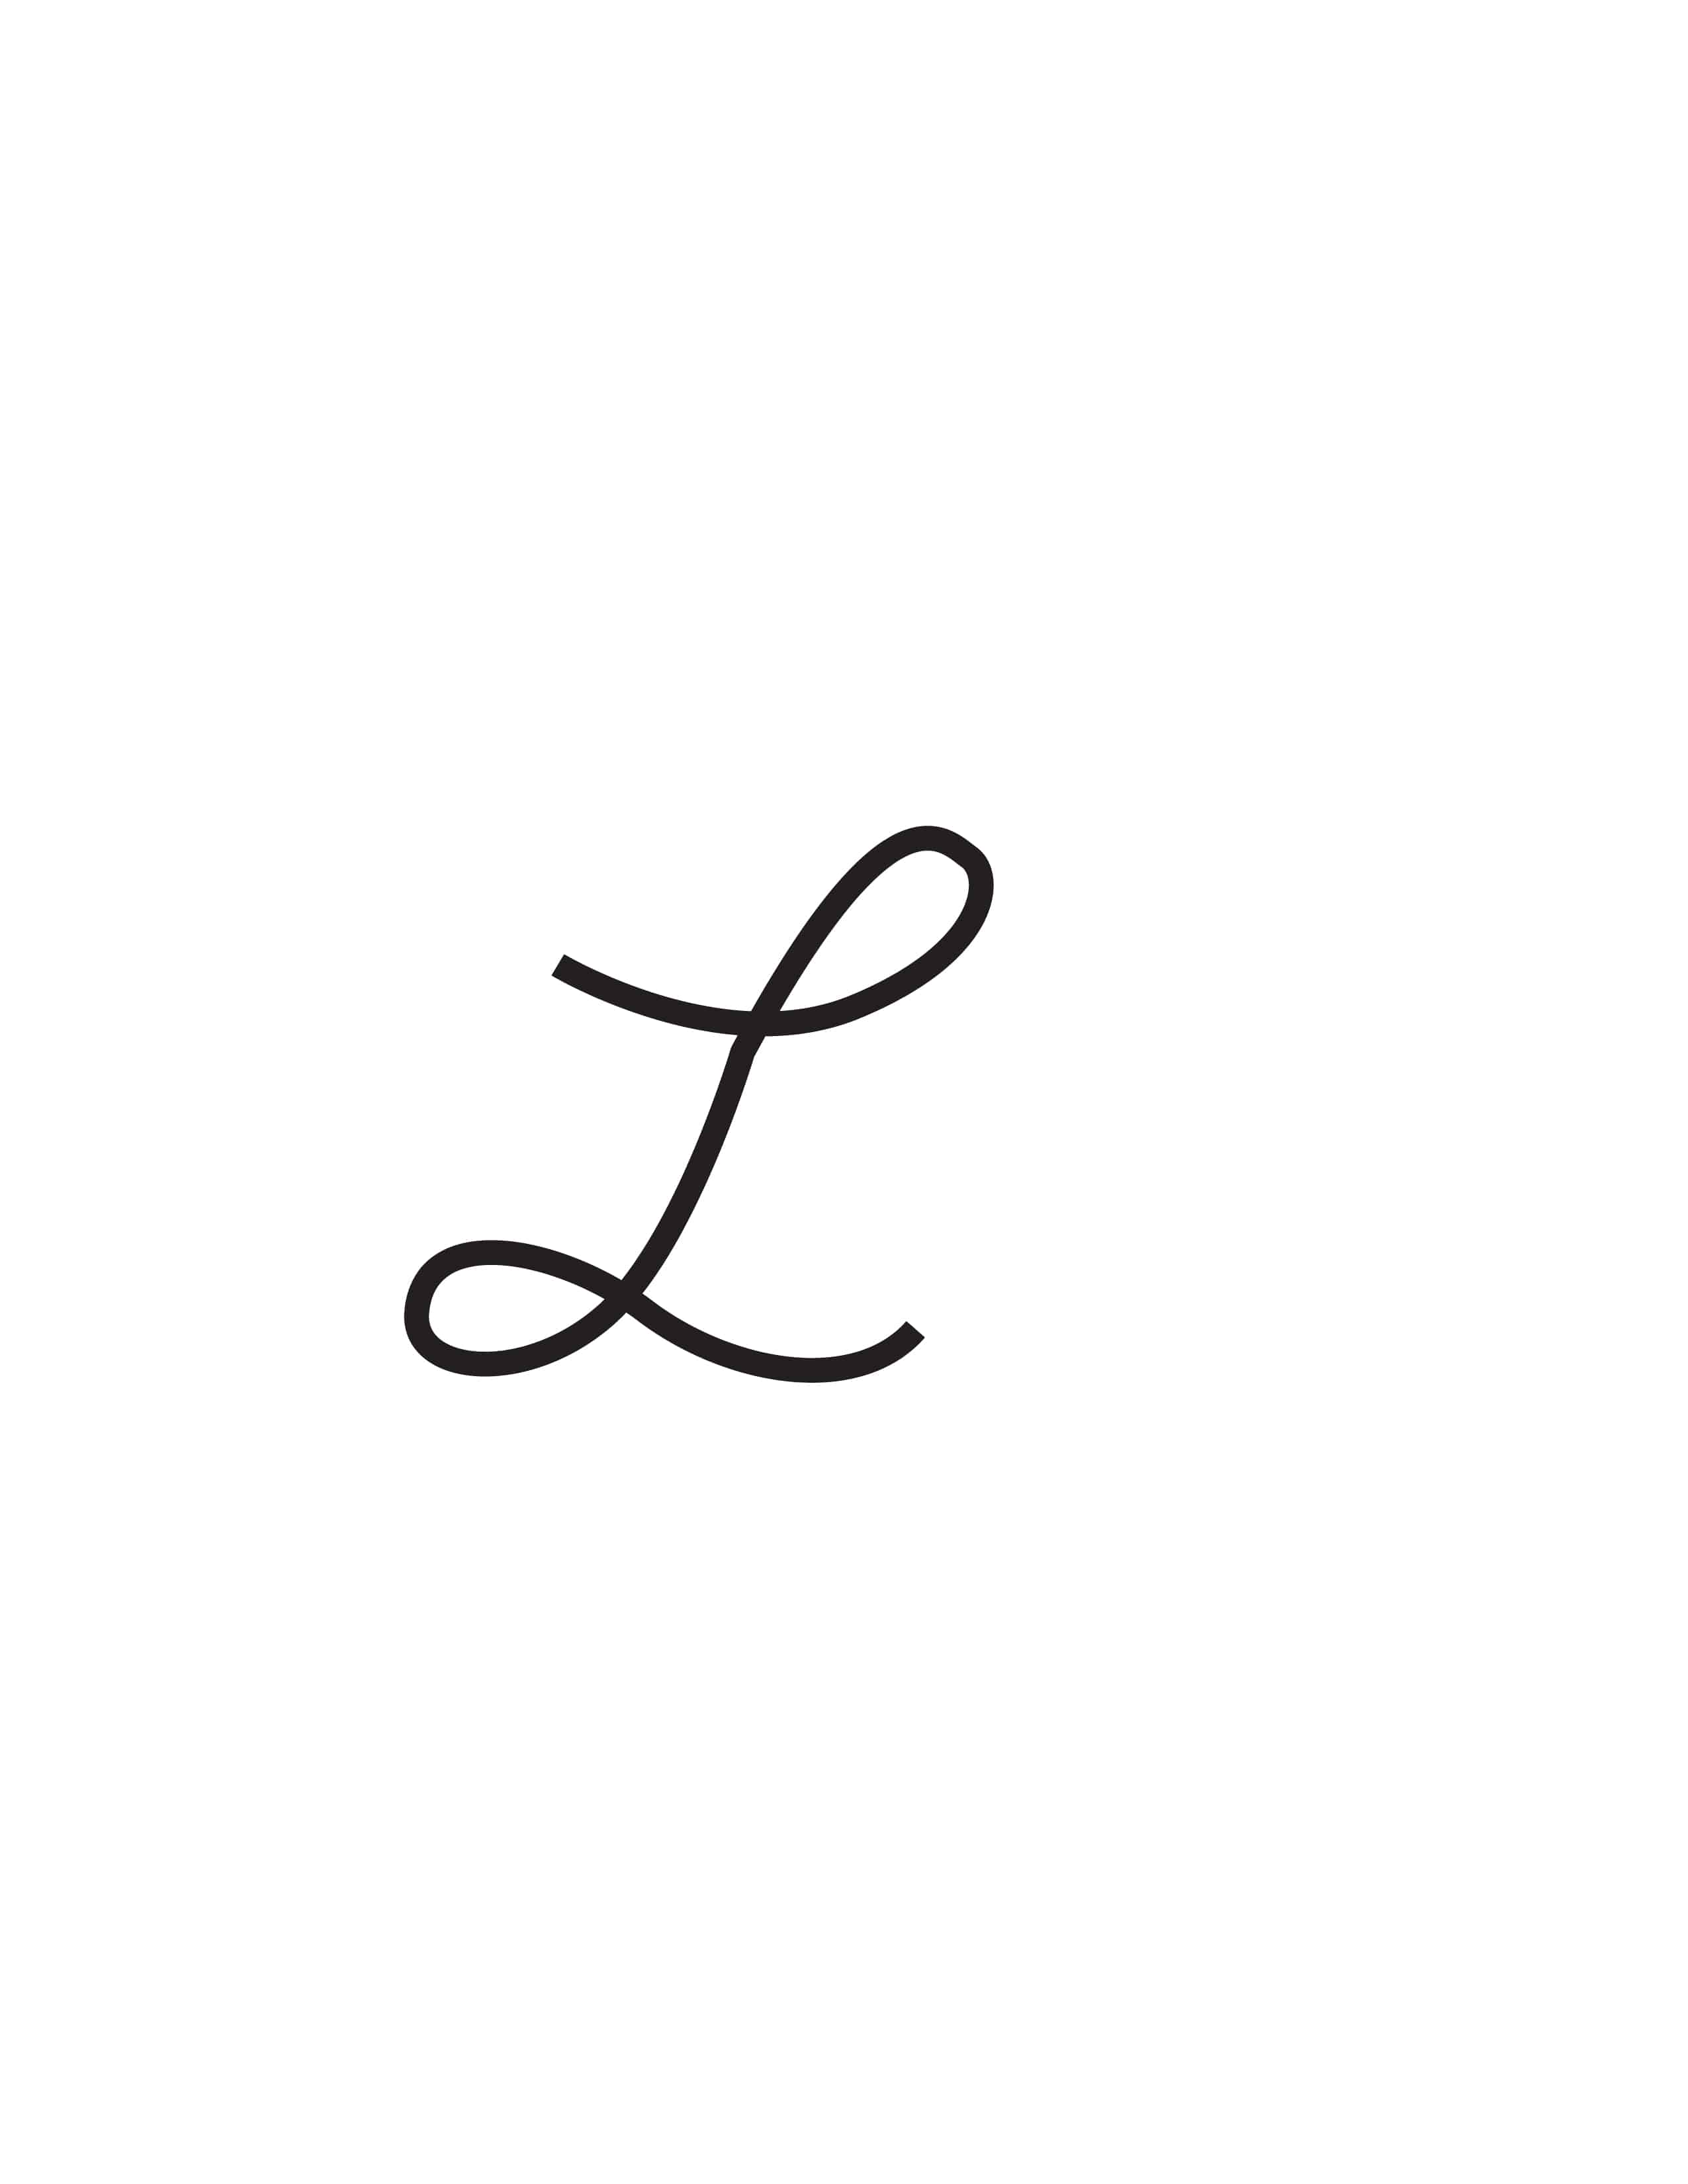 Free Printable Cursive Letters - Capital Cursive L - Freebie Finding ...